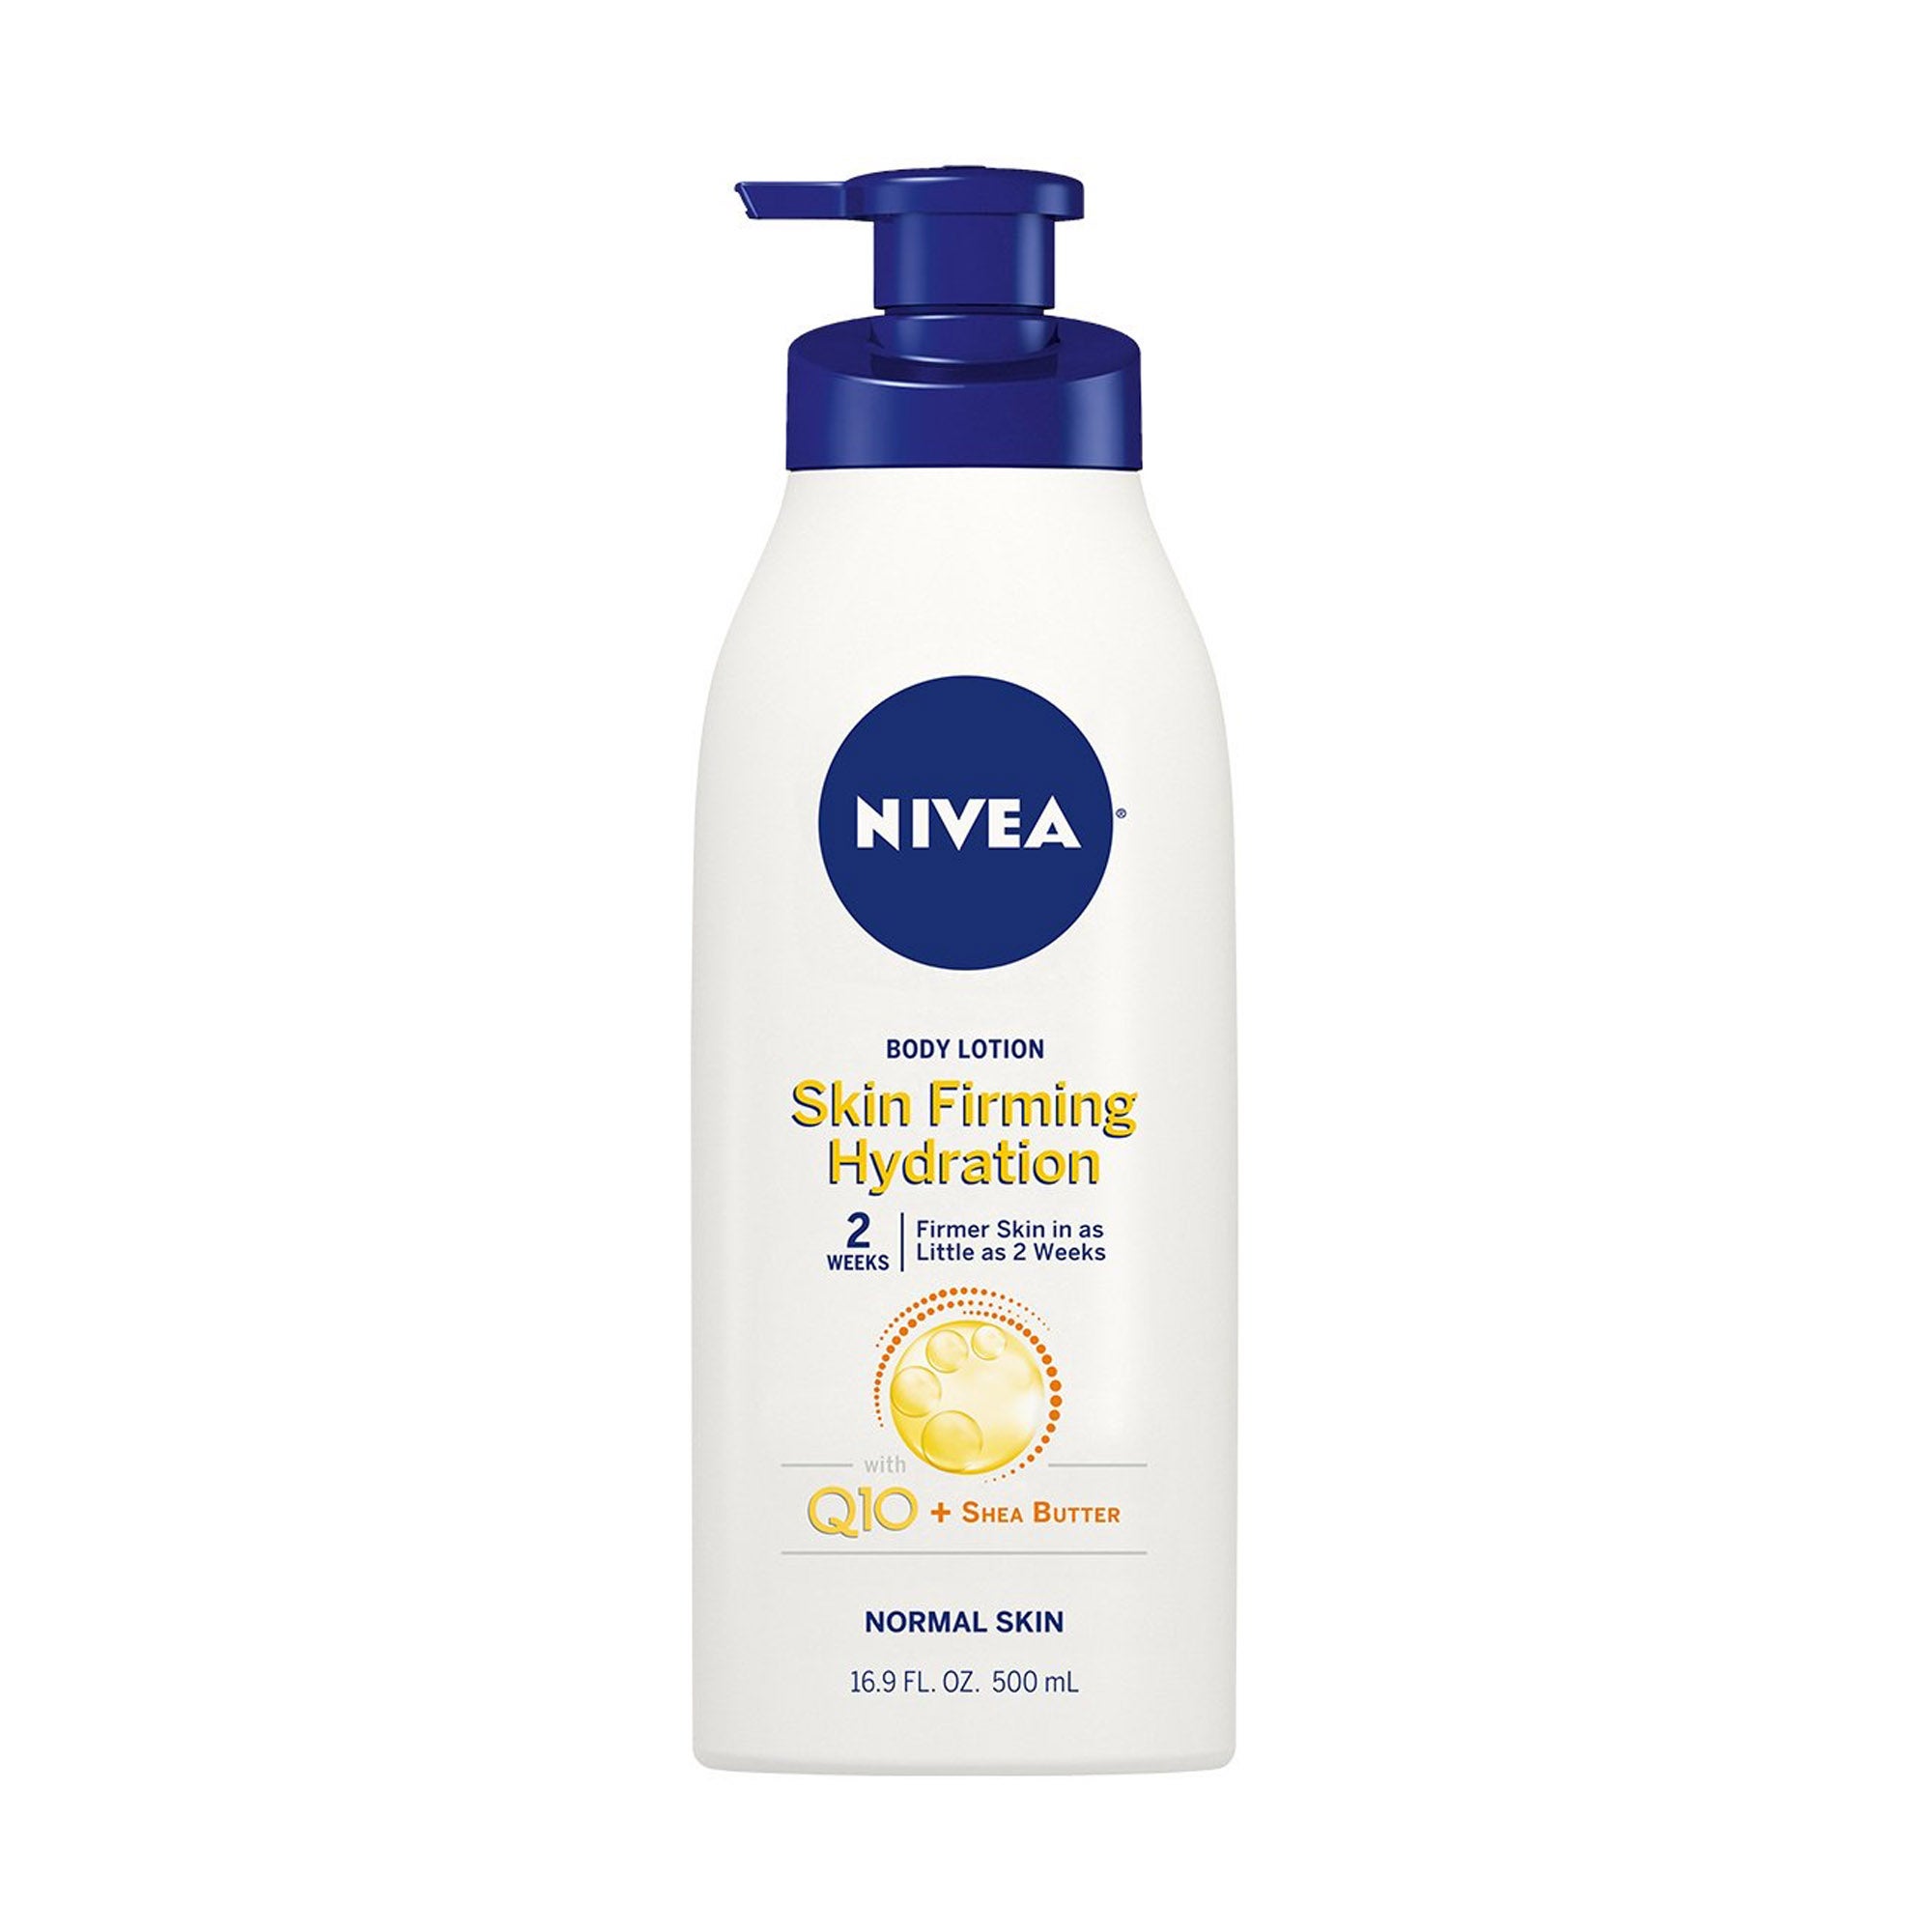 Nivea skin firming hydration body lotion